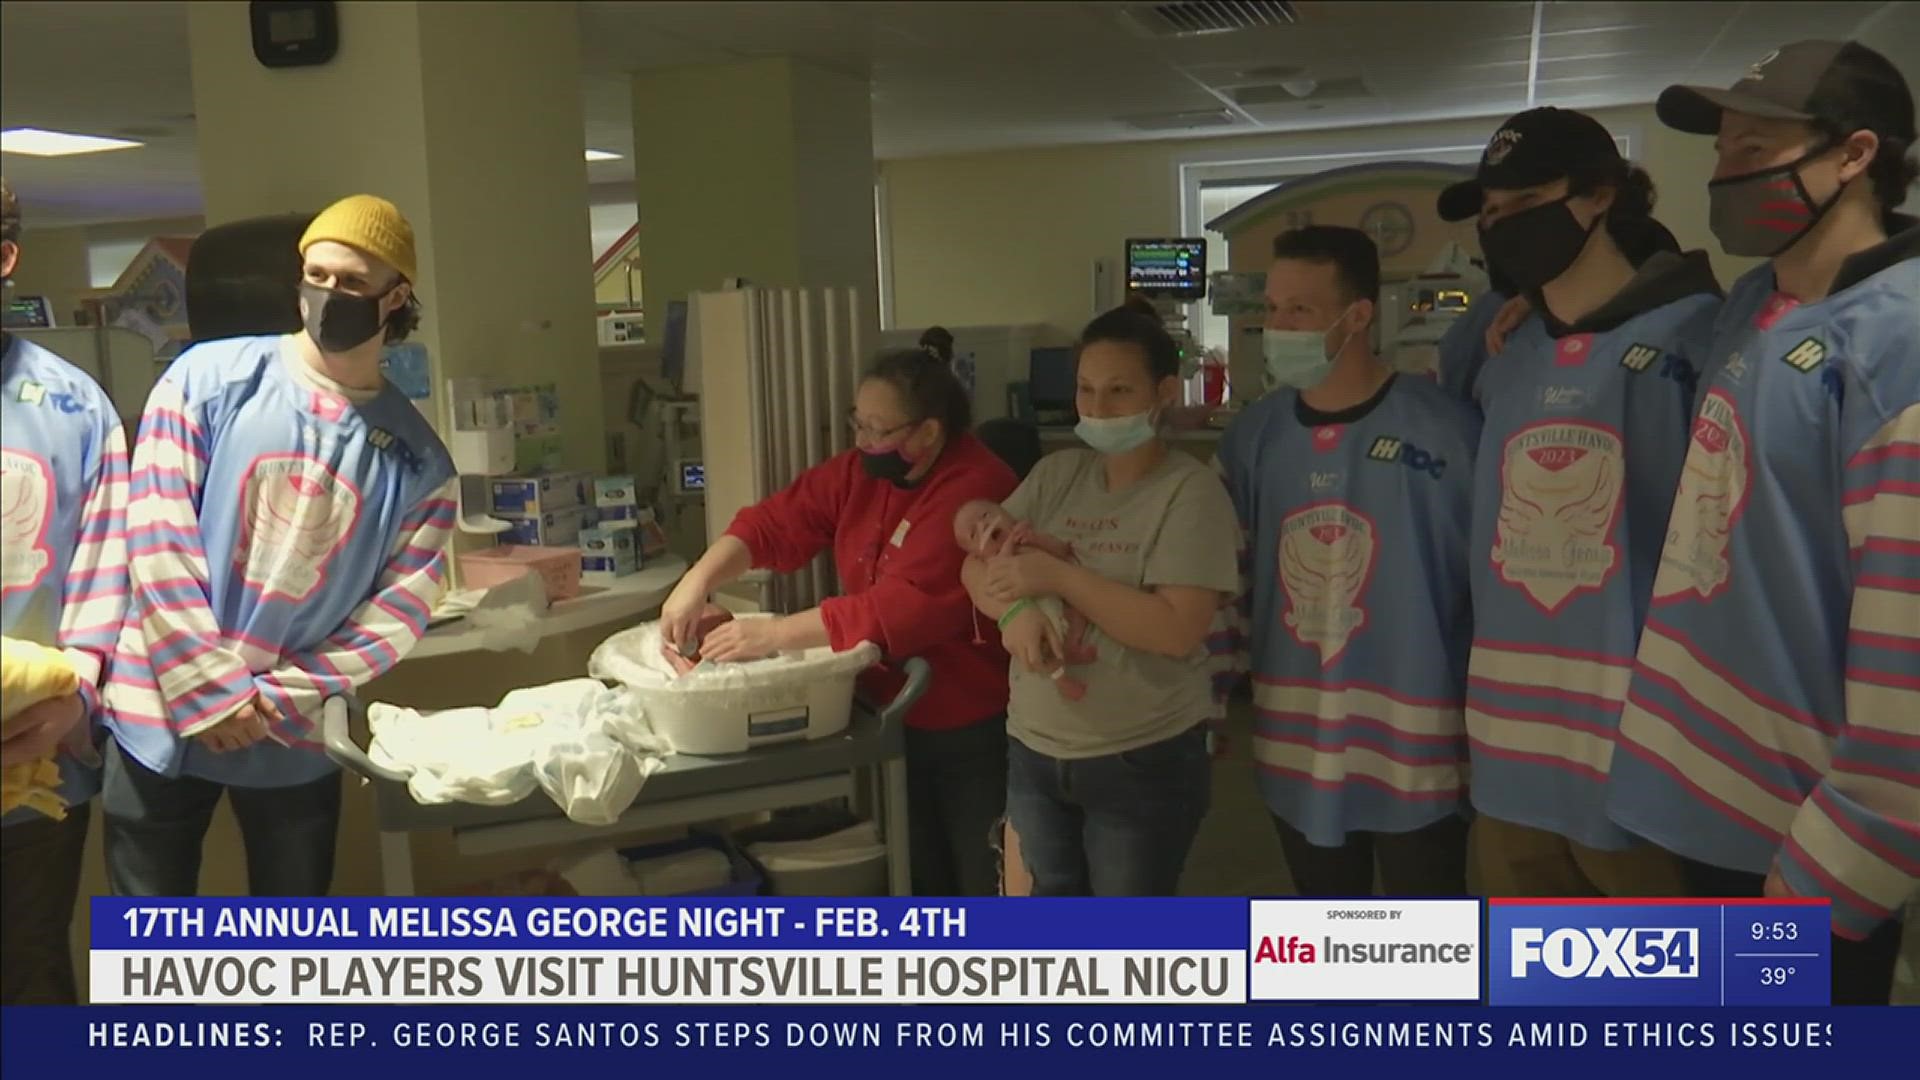 Melissa George Night has raised more than $800,000 for Huntsville Hospital's Neonatal Intensive Care Unit